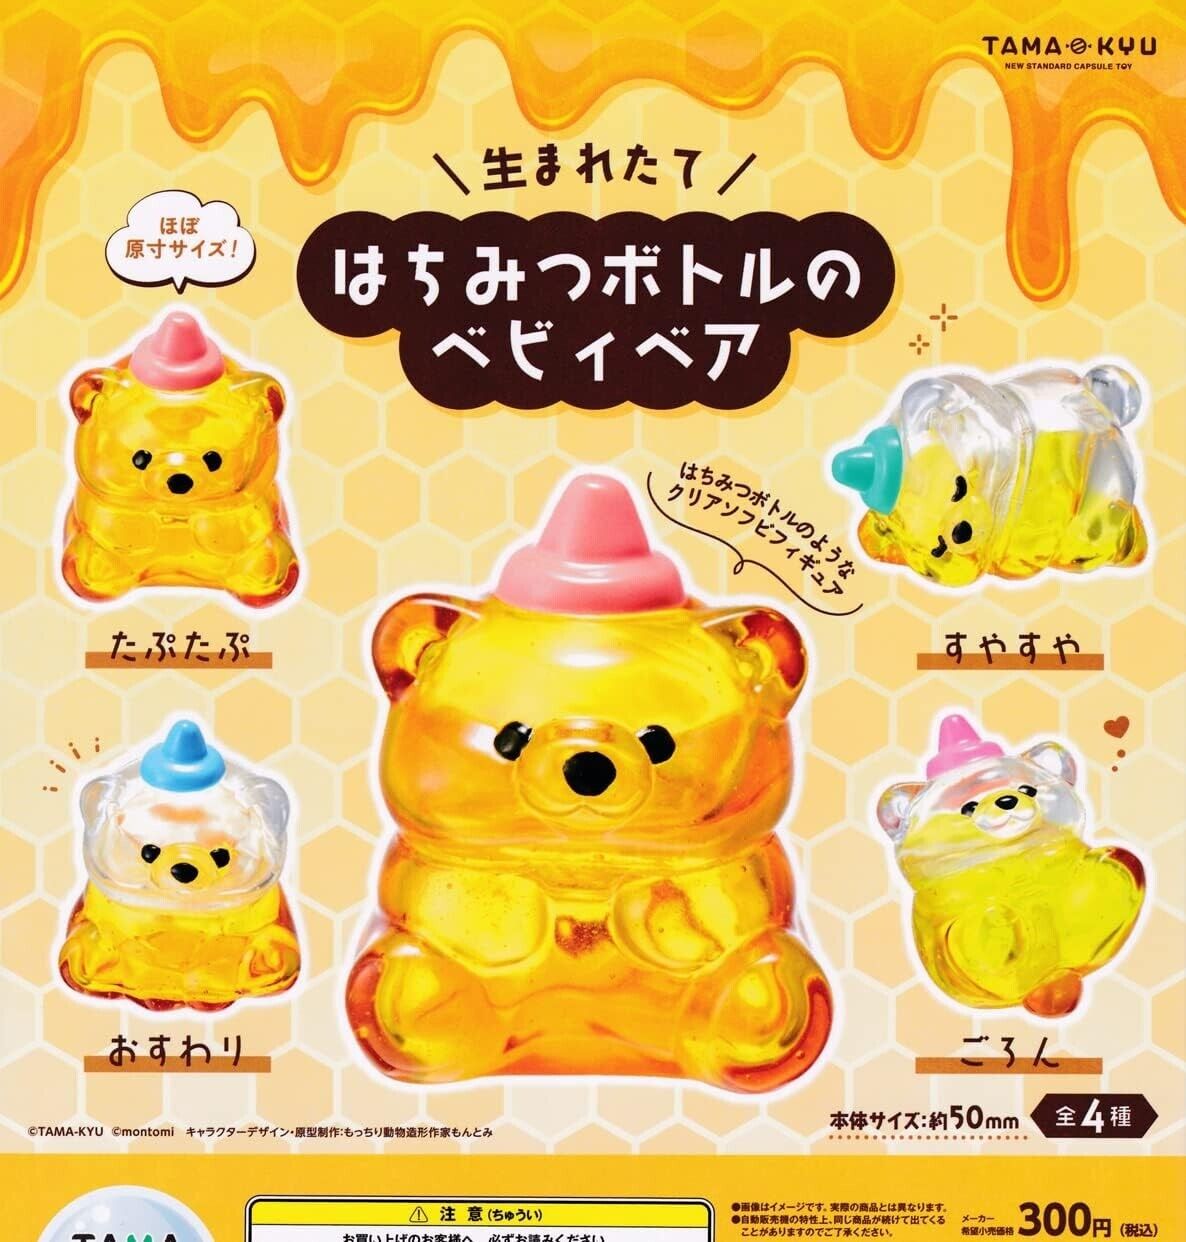 TAMA-KYU Honey Bottle Baby Bear Set of 4 Types (Full Complete)Capsule Toy Japan